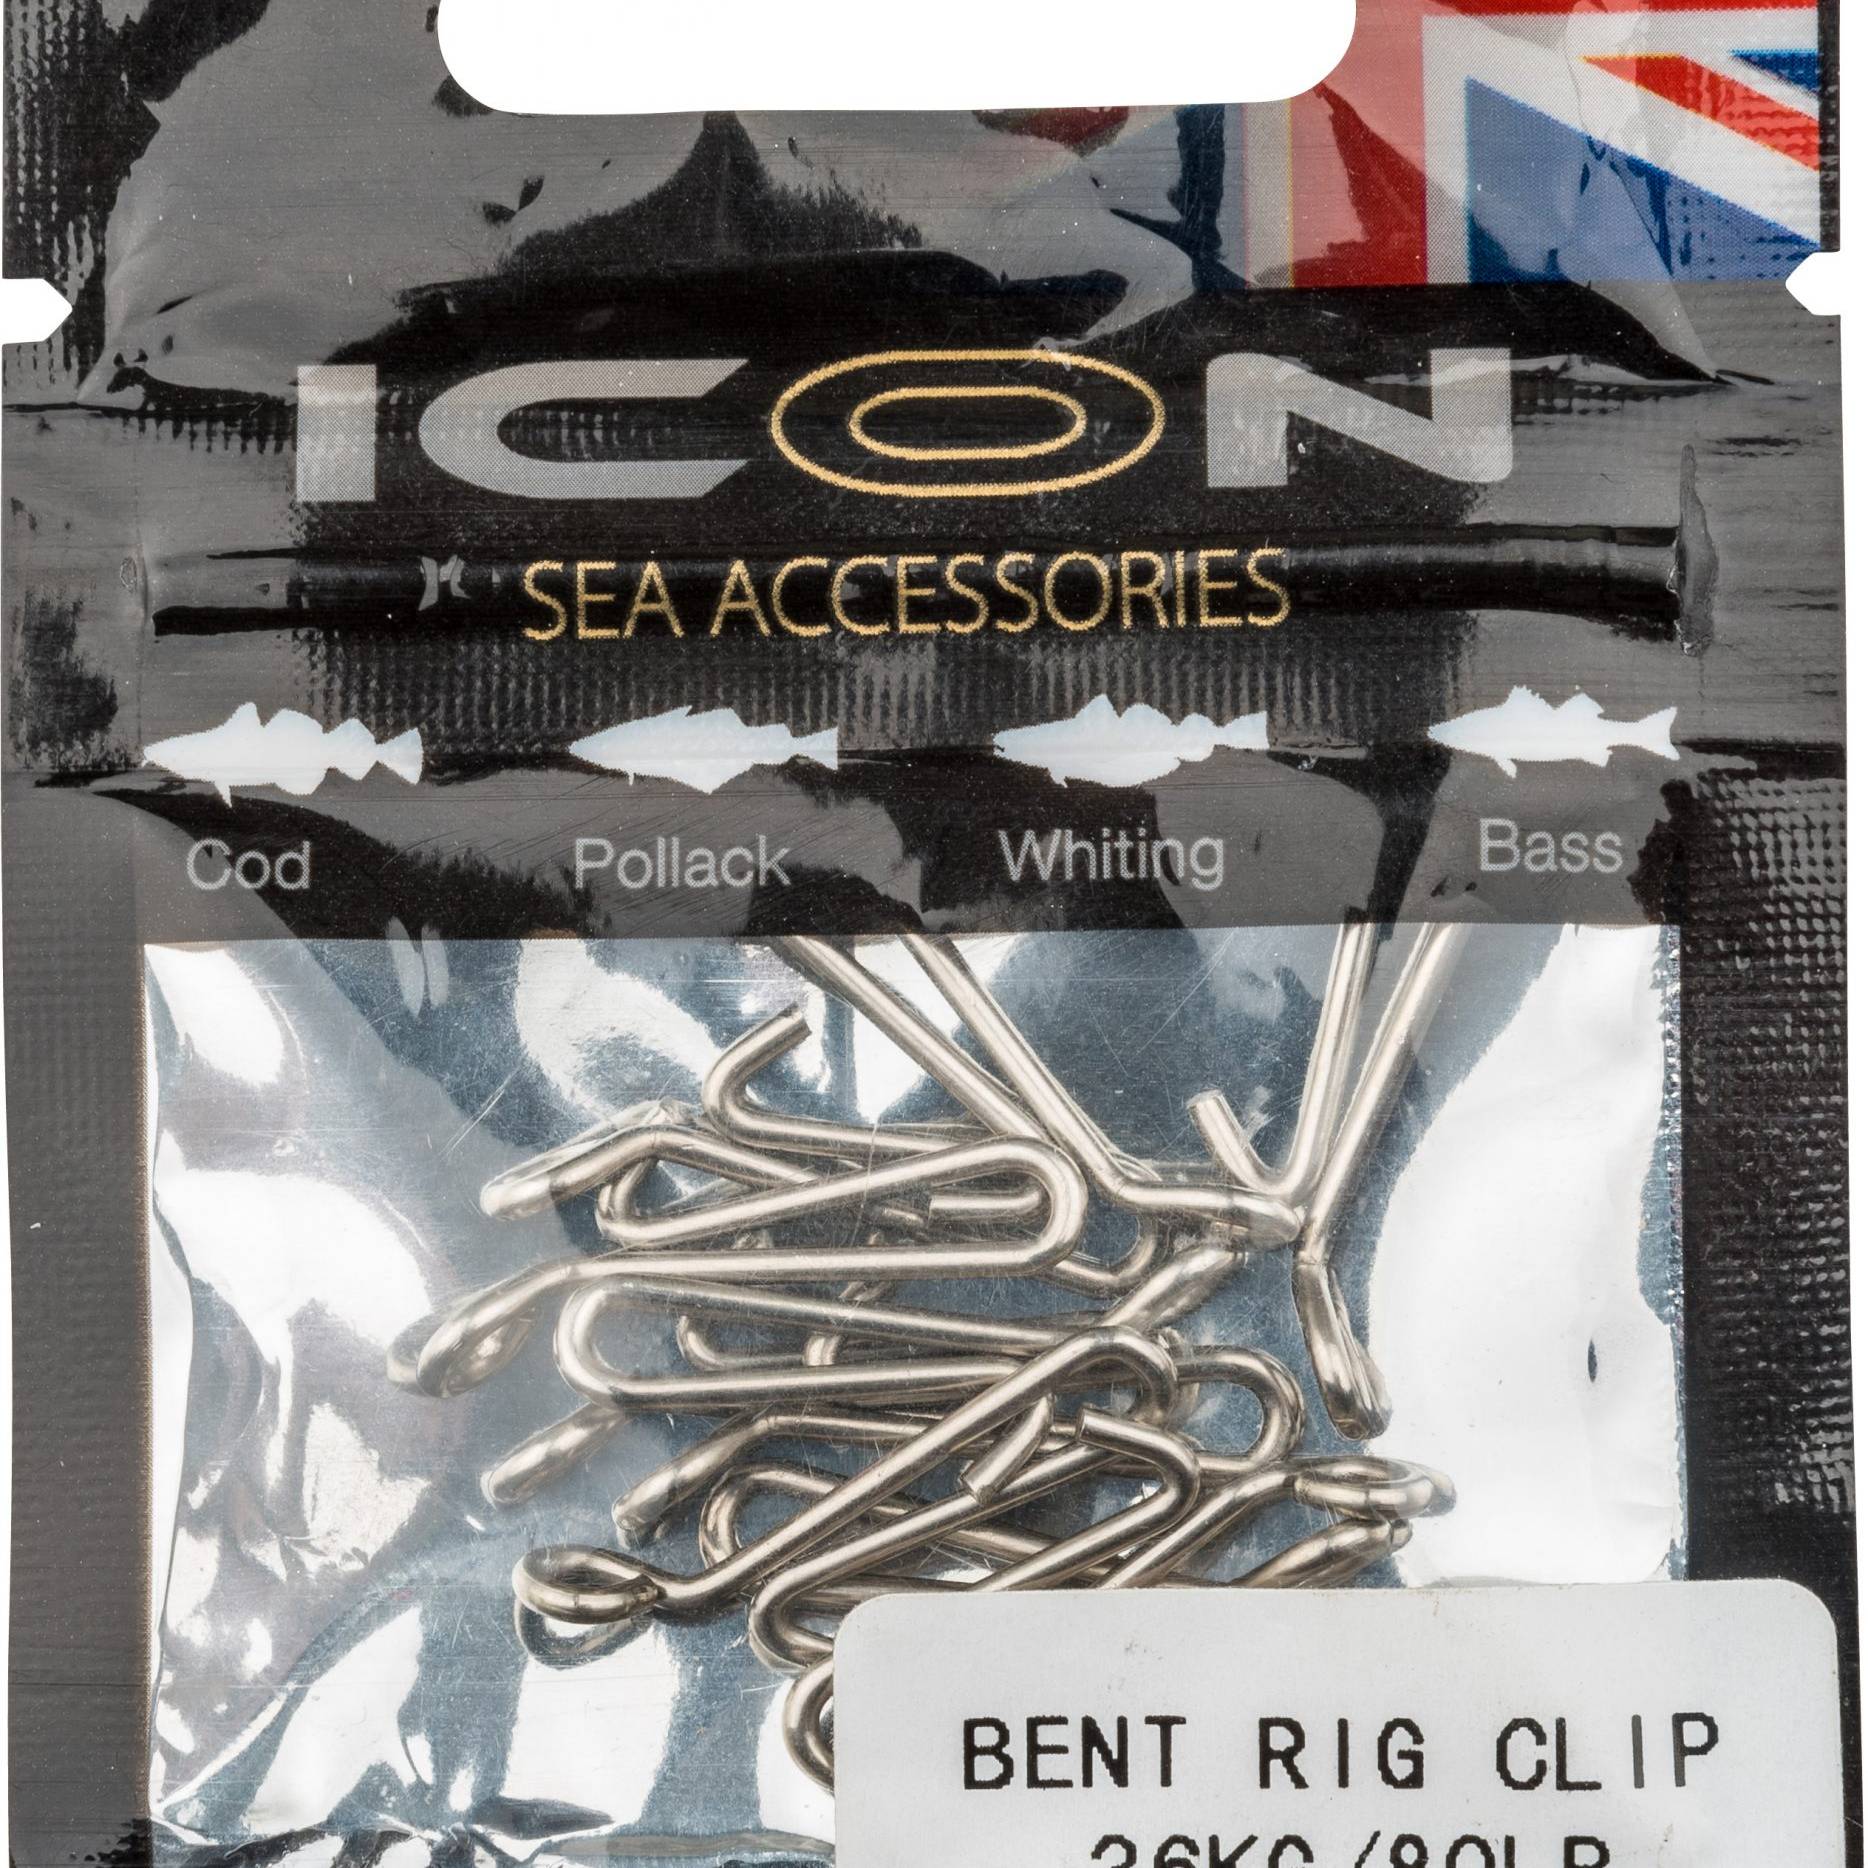 ICON Bent Rig Clip 36kg/80lb 10pk